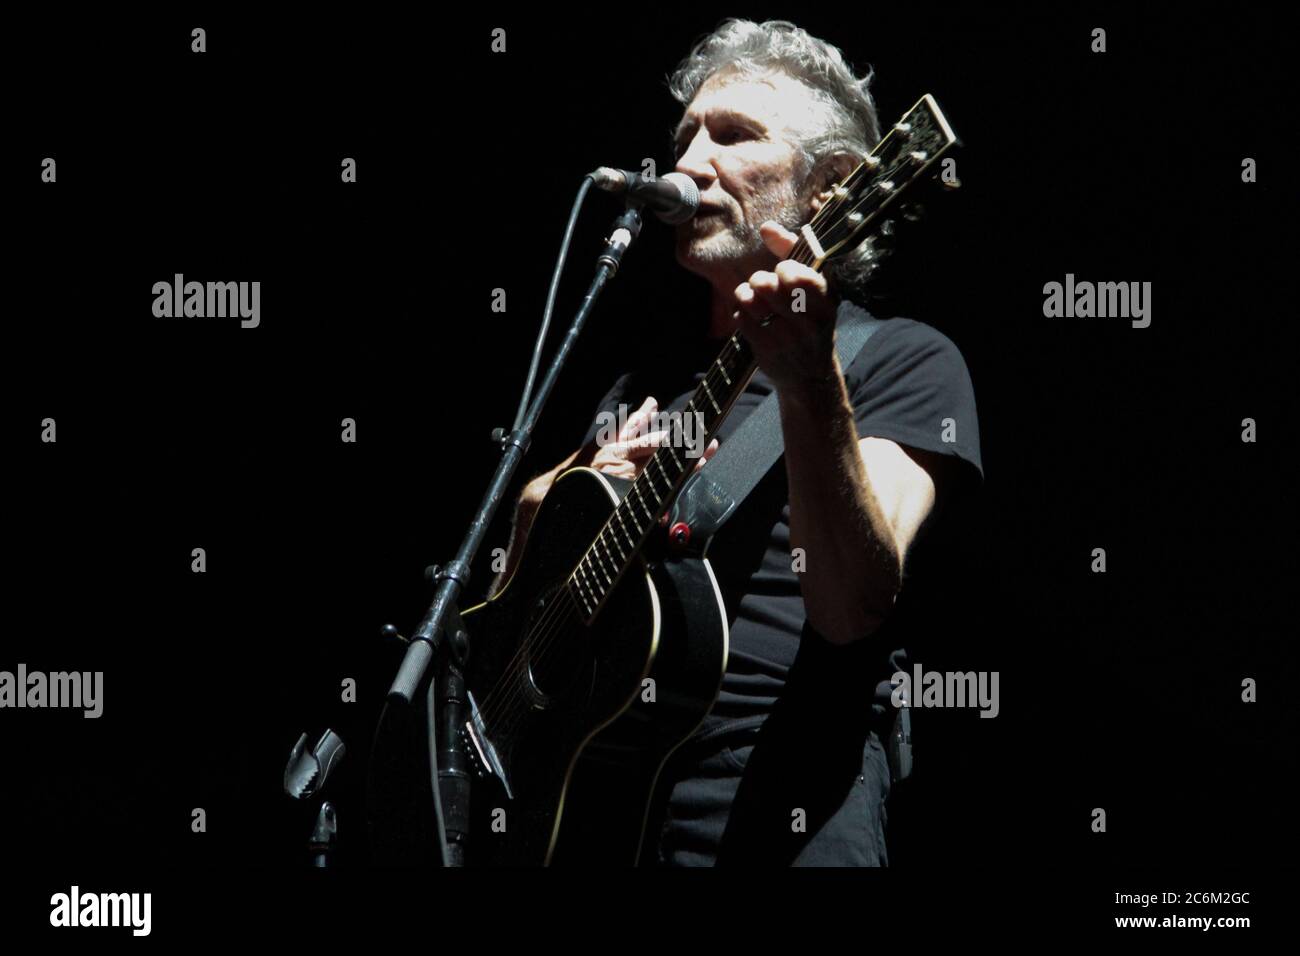 RIO DE JANEIRO, 29.03.2012: Roger Waters performs on Joao Havelange Stadium in Rio de Janeiro (Néstor J. Beremblum / Alamy News) Stock Photo